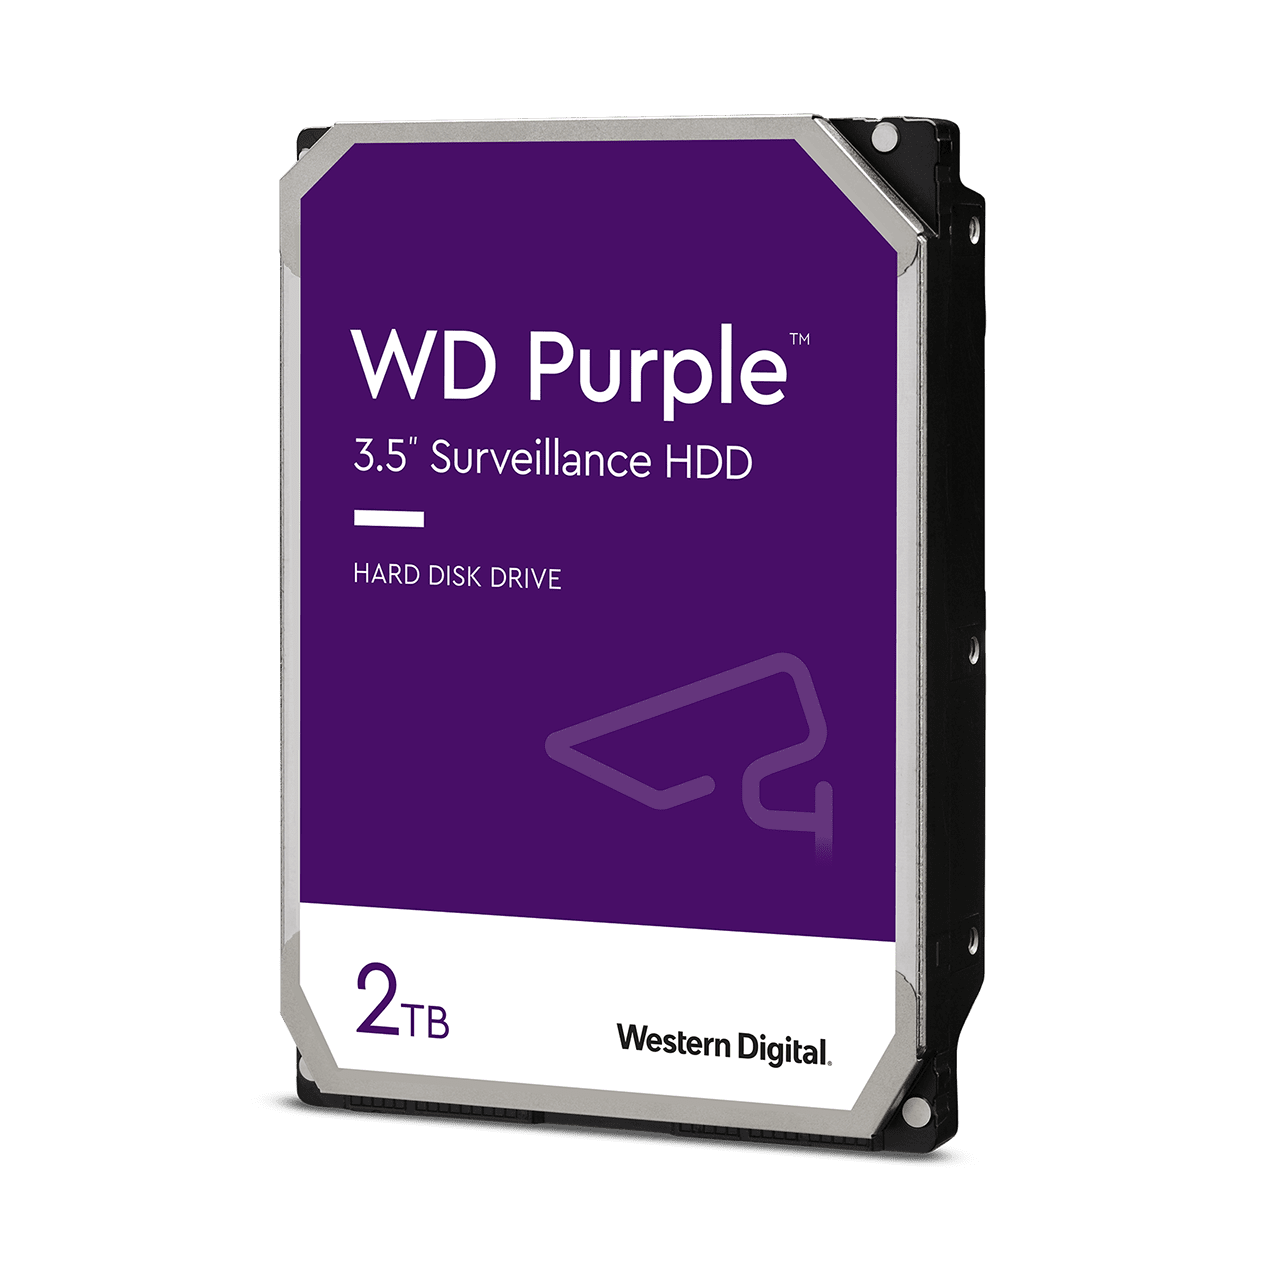 WD Purple Surveillance Hard Drive | Western Digital Tienda